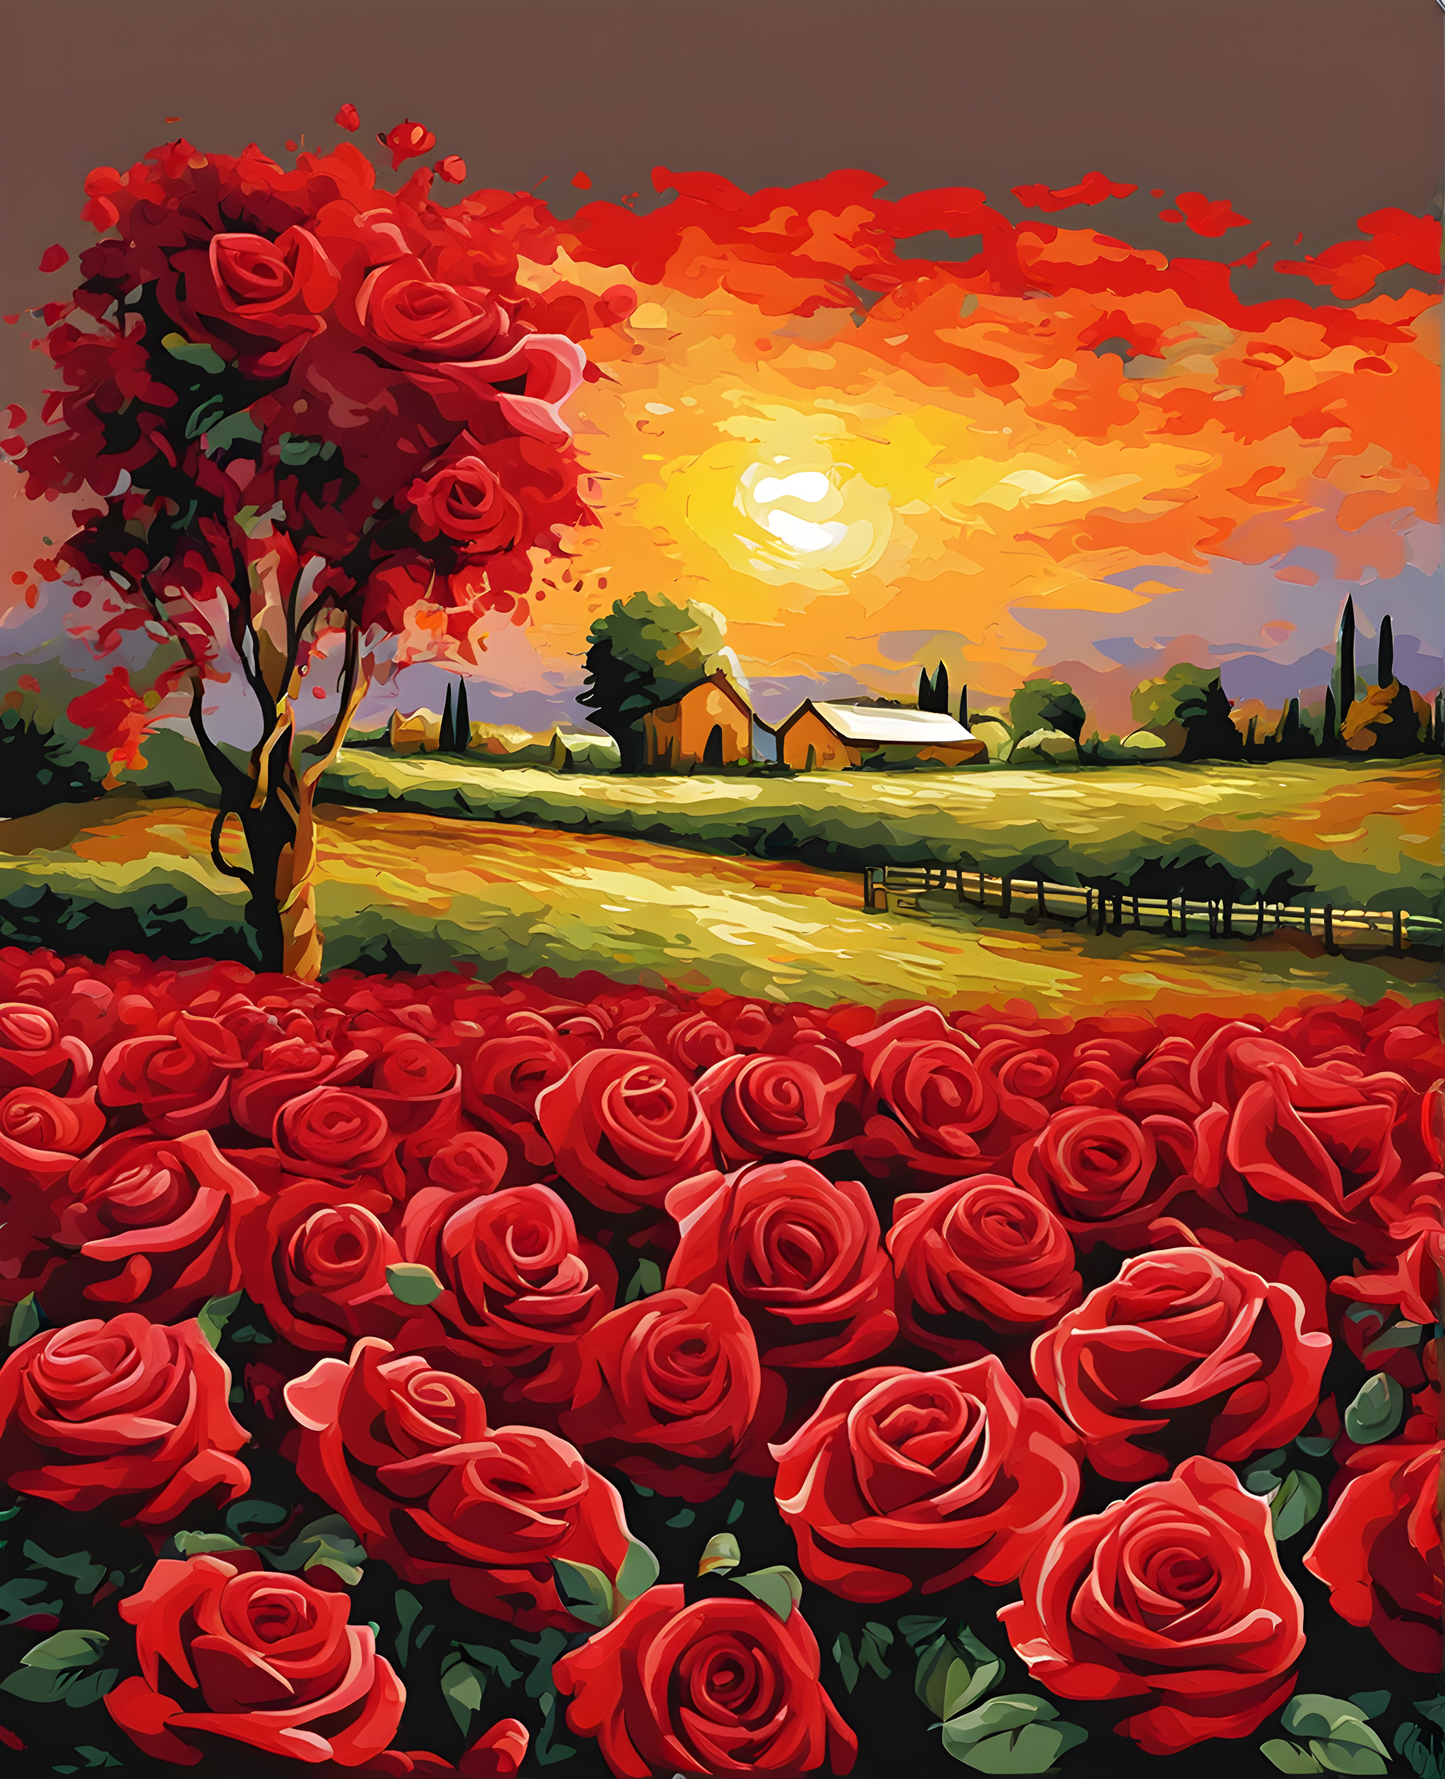 Red Roses Field (6) - Van-Go Paint-By-Number Kit